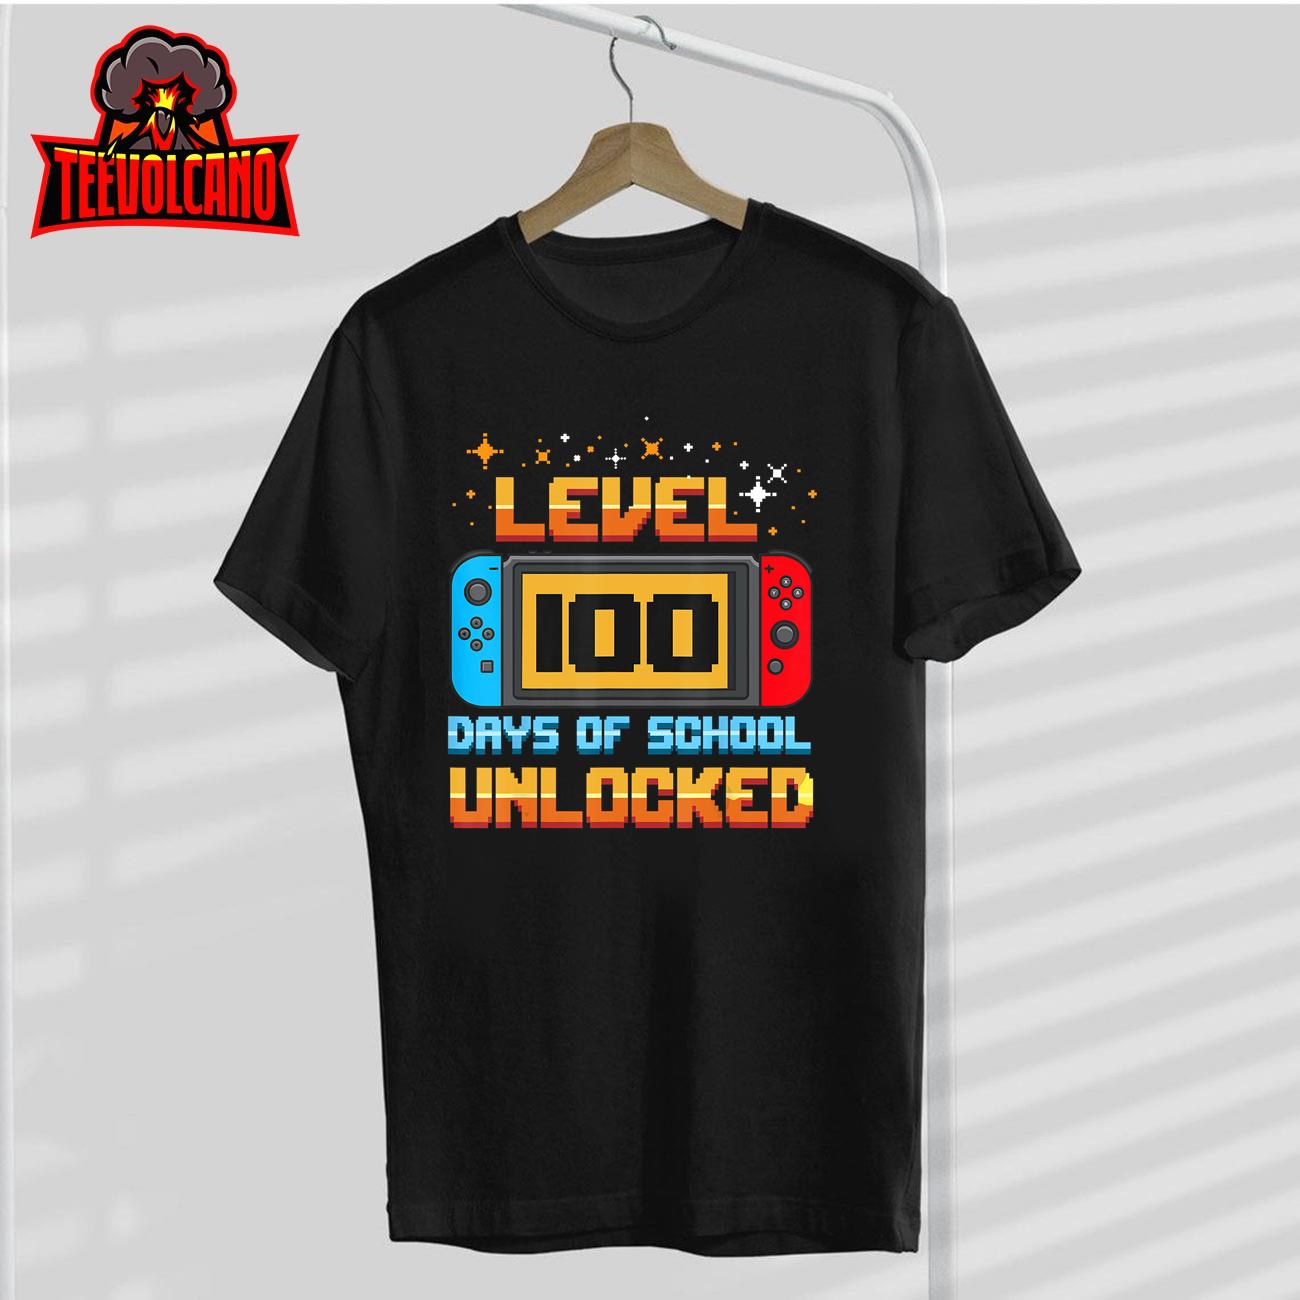 Level 100 Days Of School Unlocked Gamer Boys Funny 100th Day T-Shirt